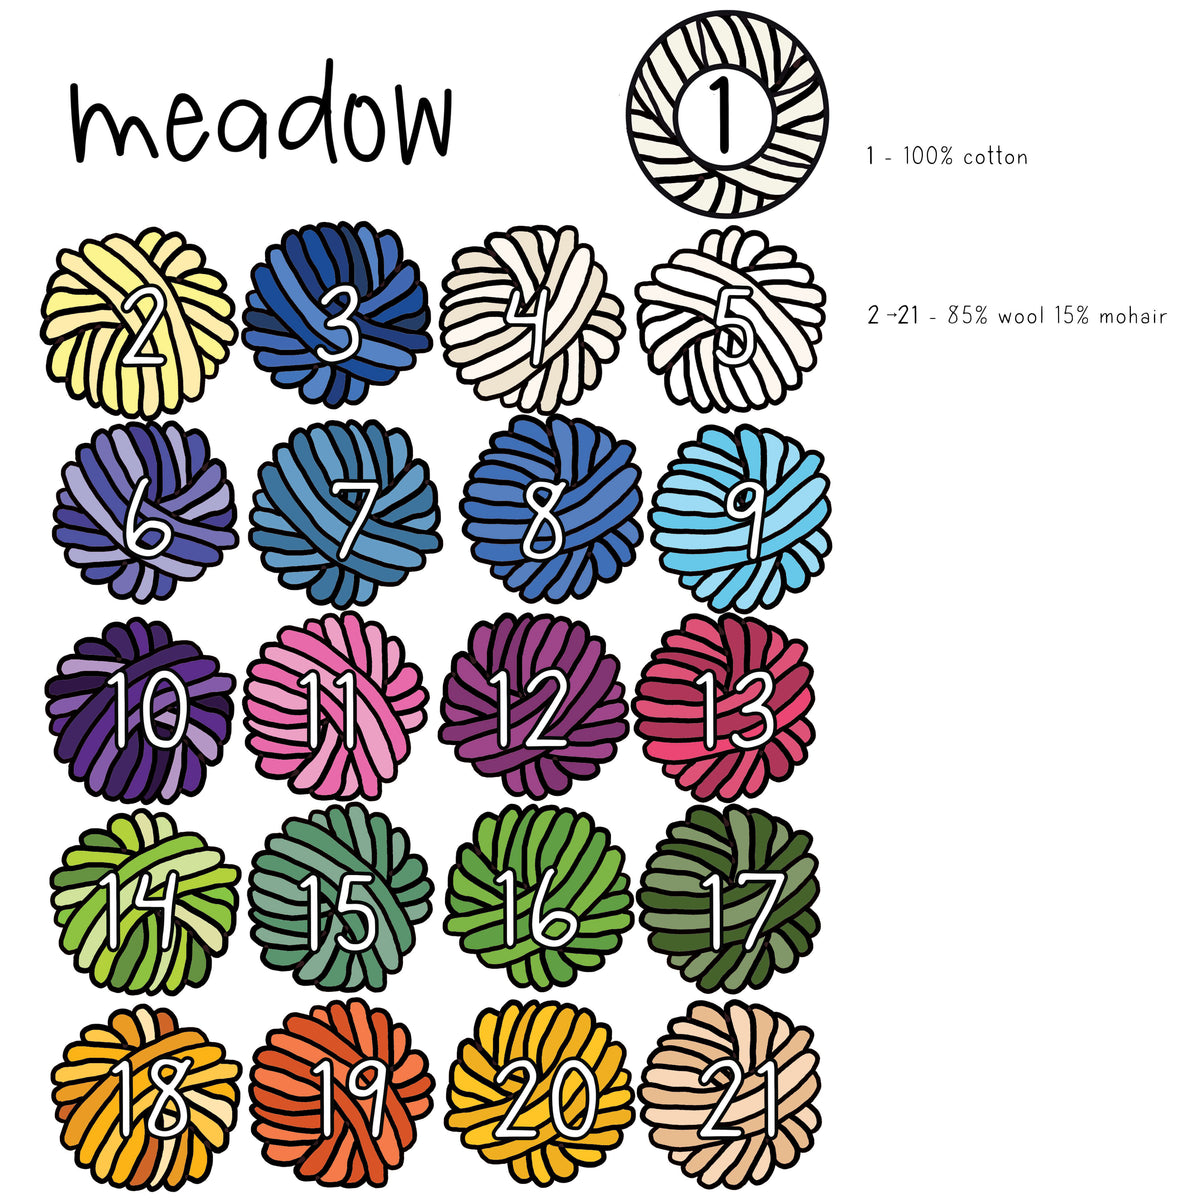 Wool Yarn Kit - Colors of the Meadow